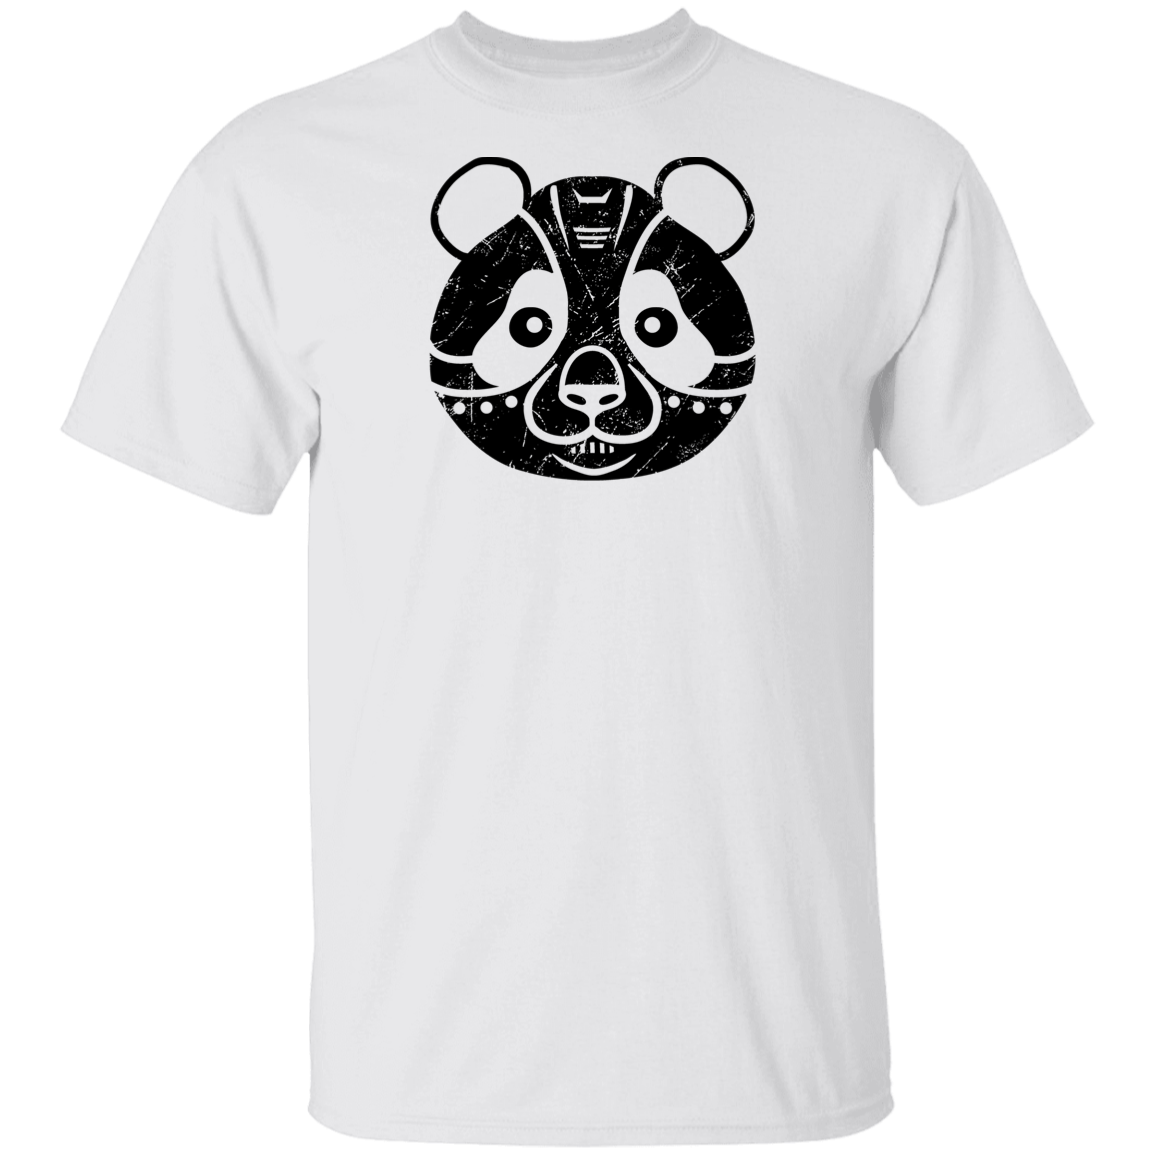 Black Distressed Emblem T-Shirt for Kids (Panda/Fuji)